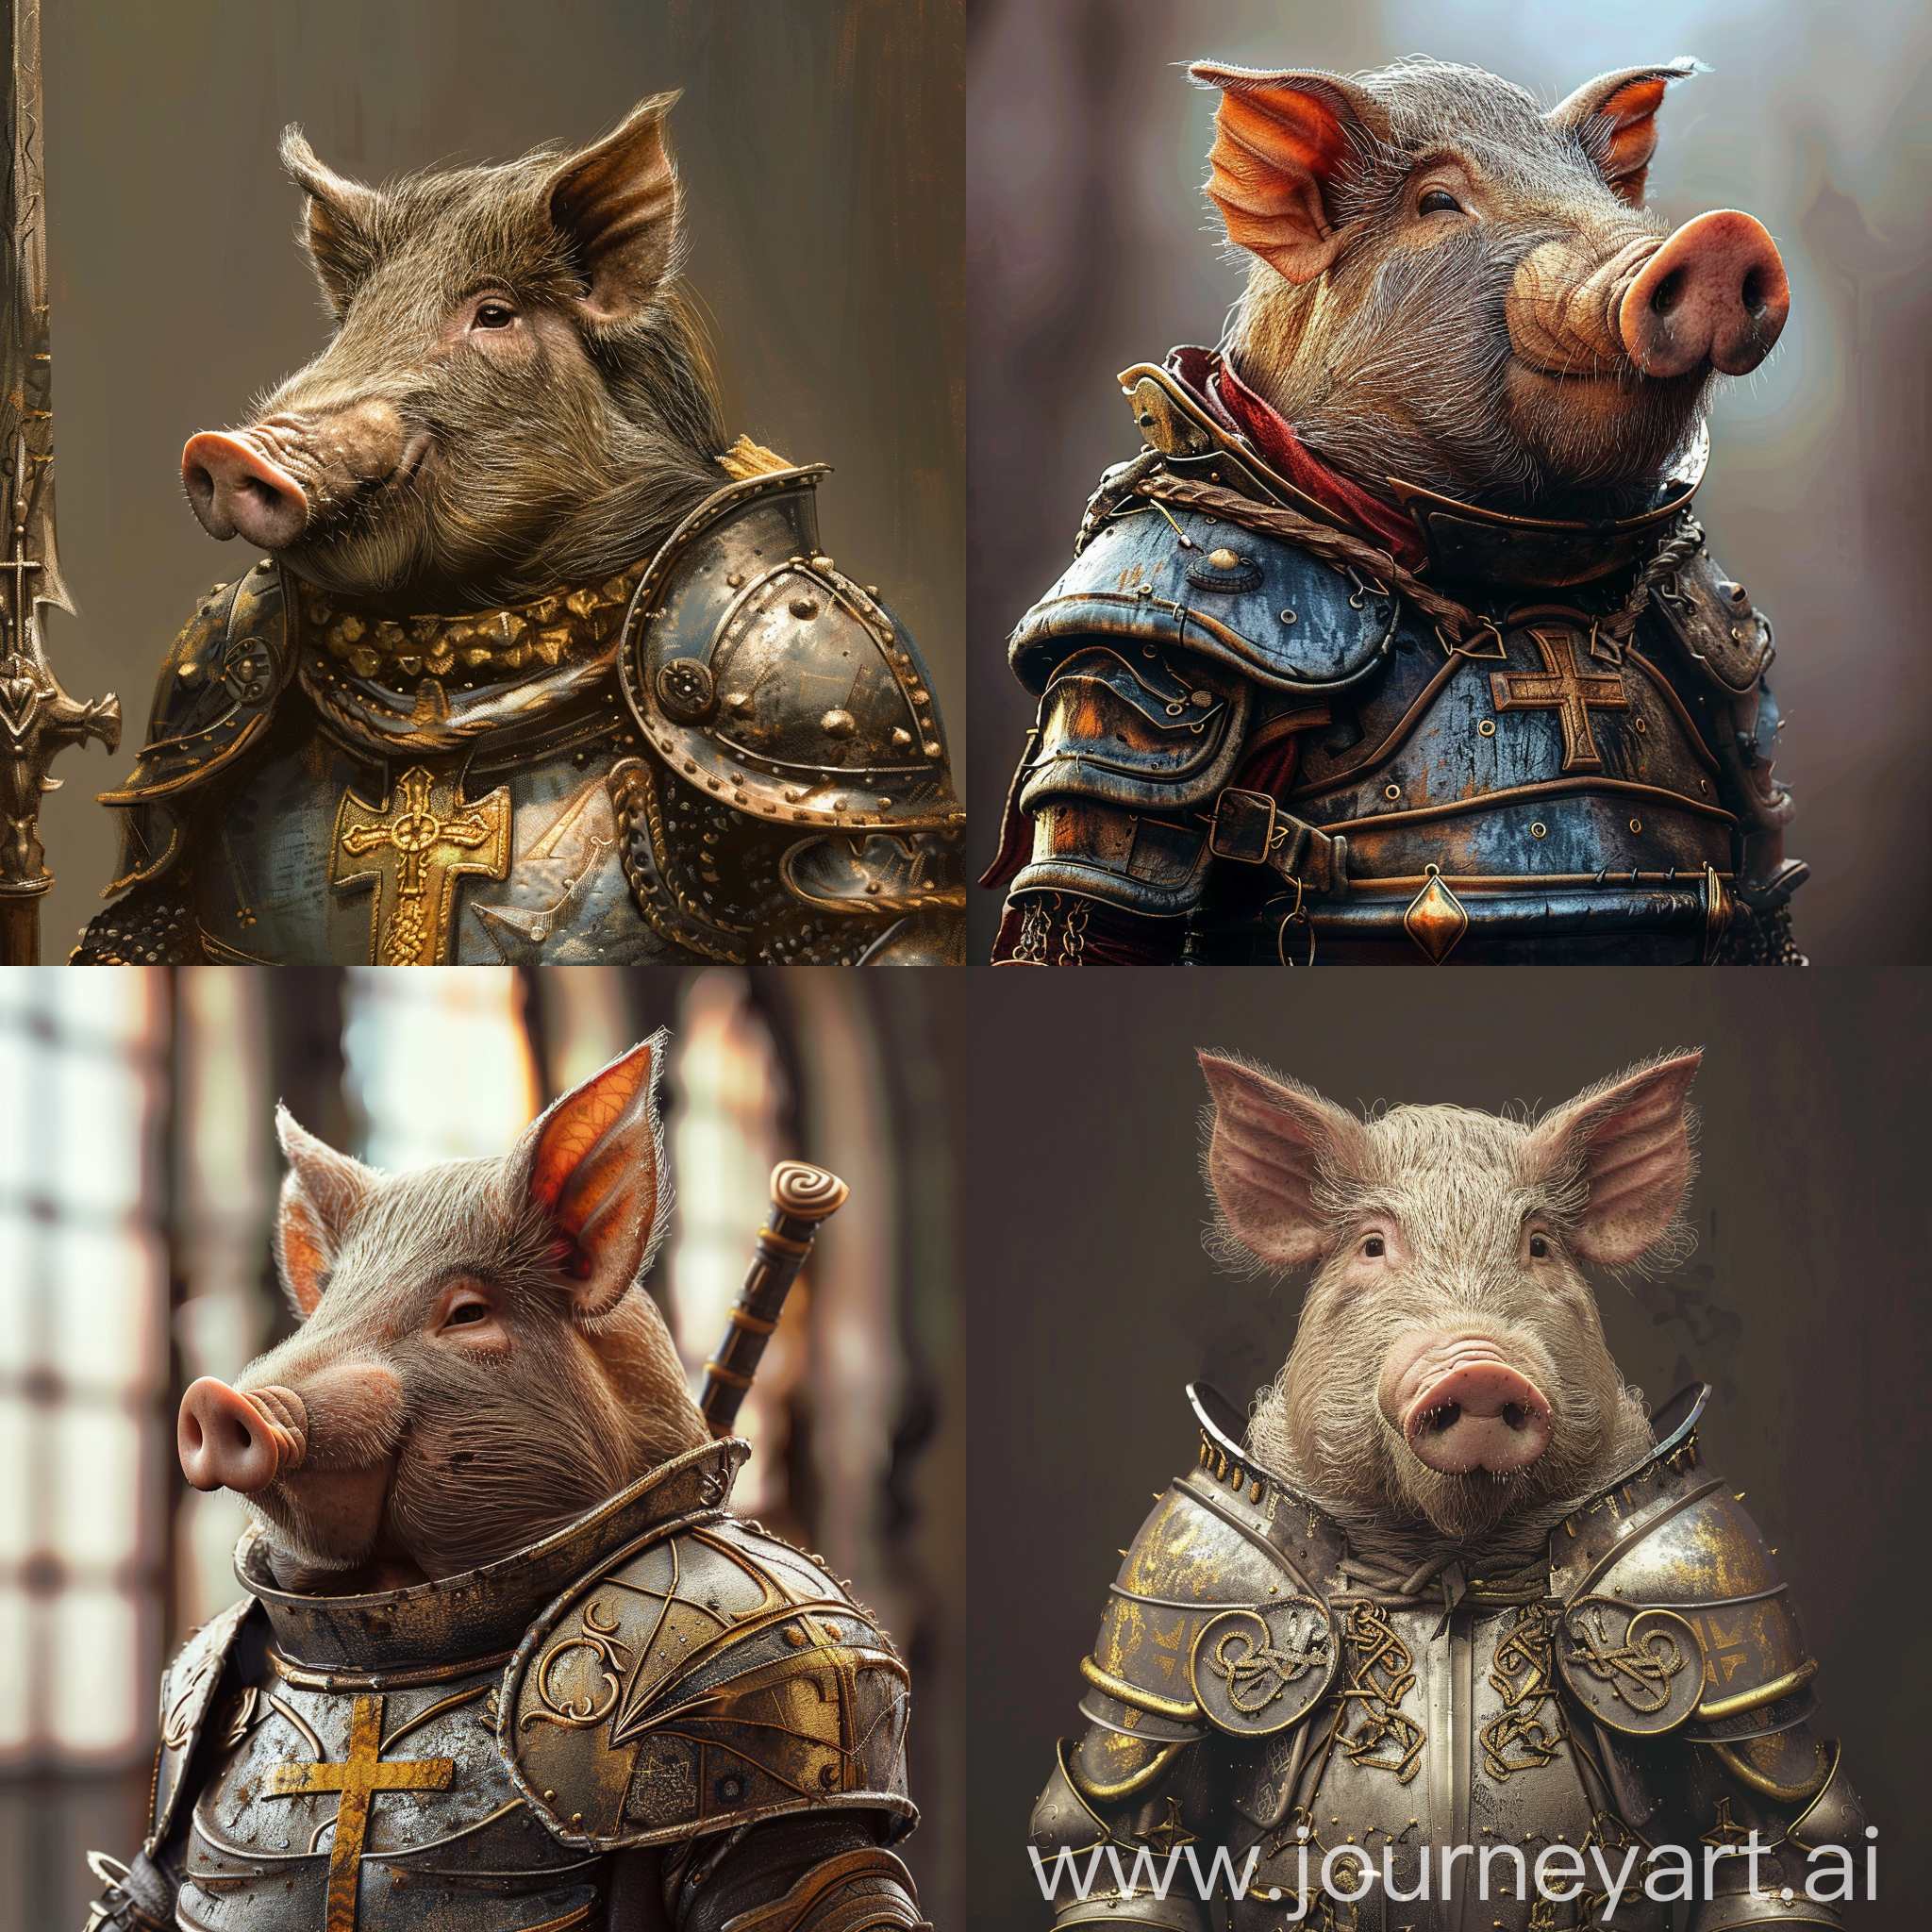 A hog dressed in crusader armor. Hyper realistic